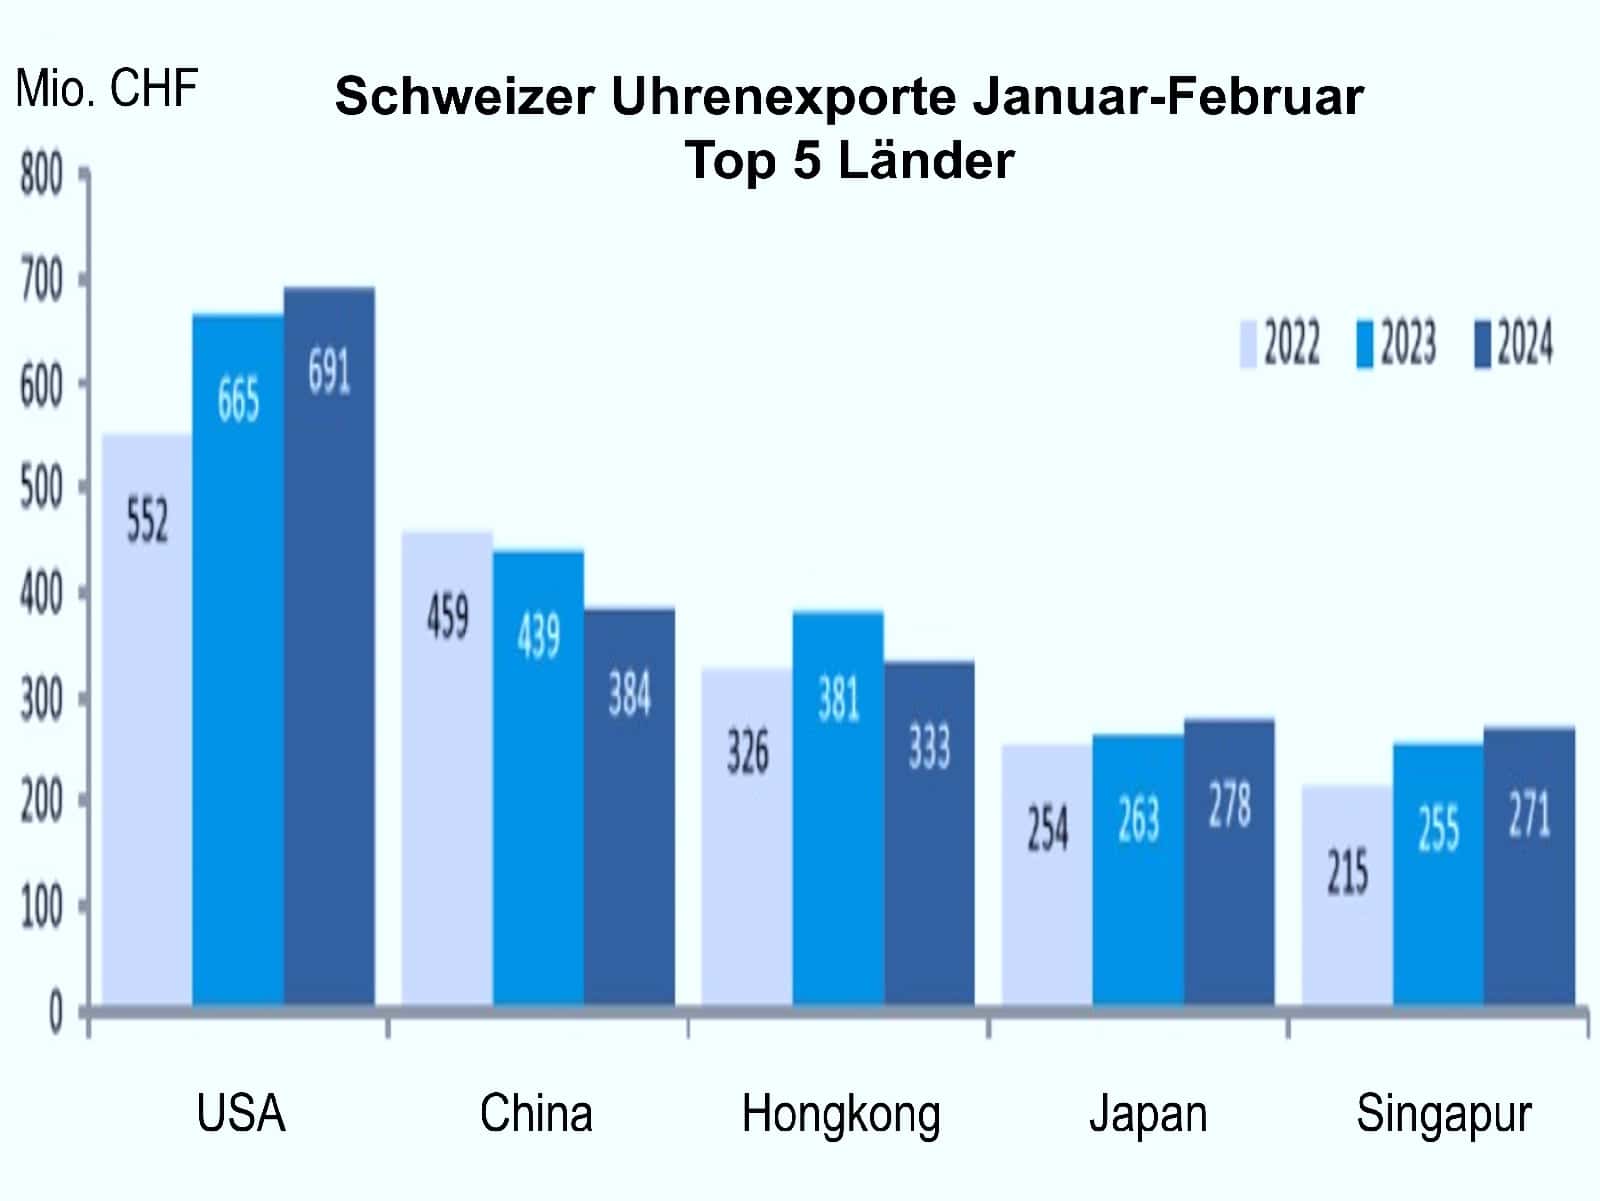 Schweizer Uhrenexporte Januar-Februar 2022-2024 TOP 5 Länder